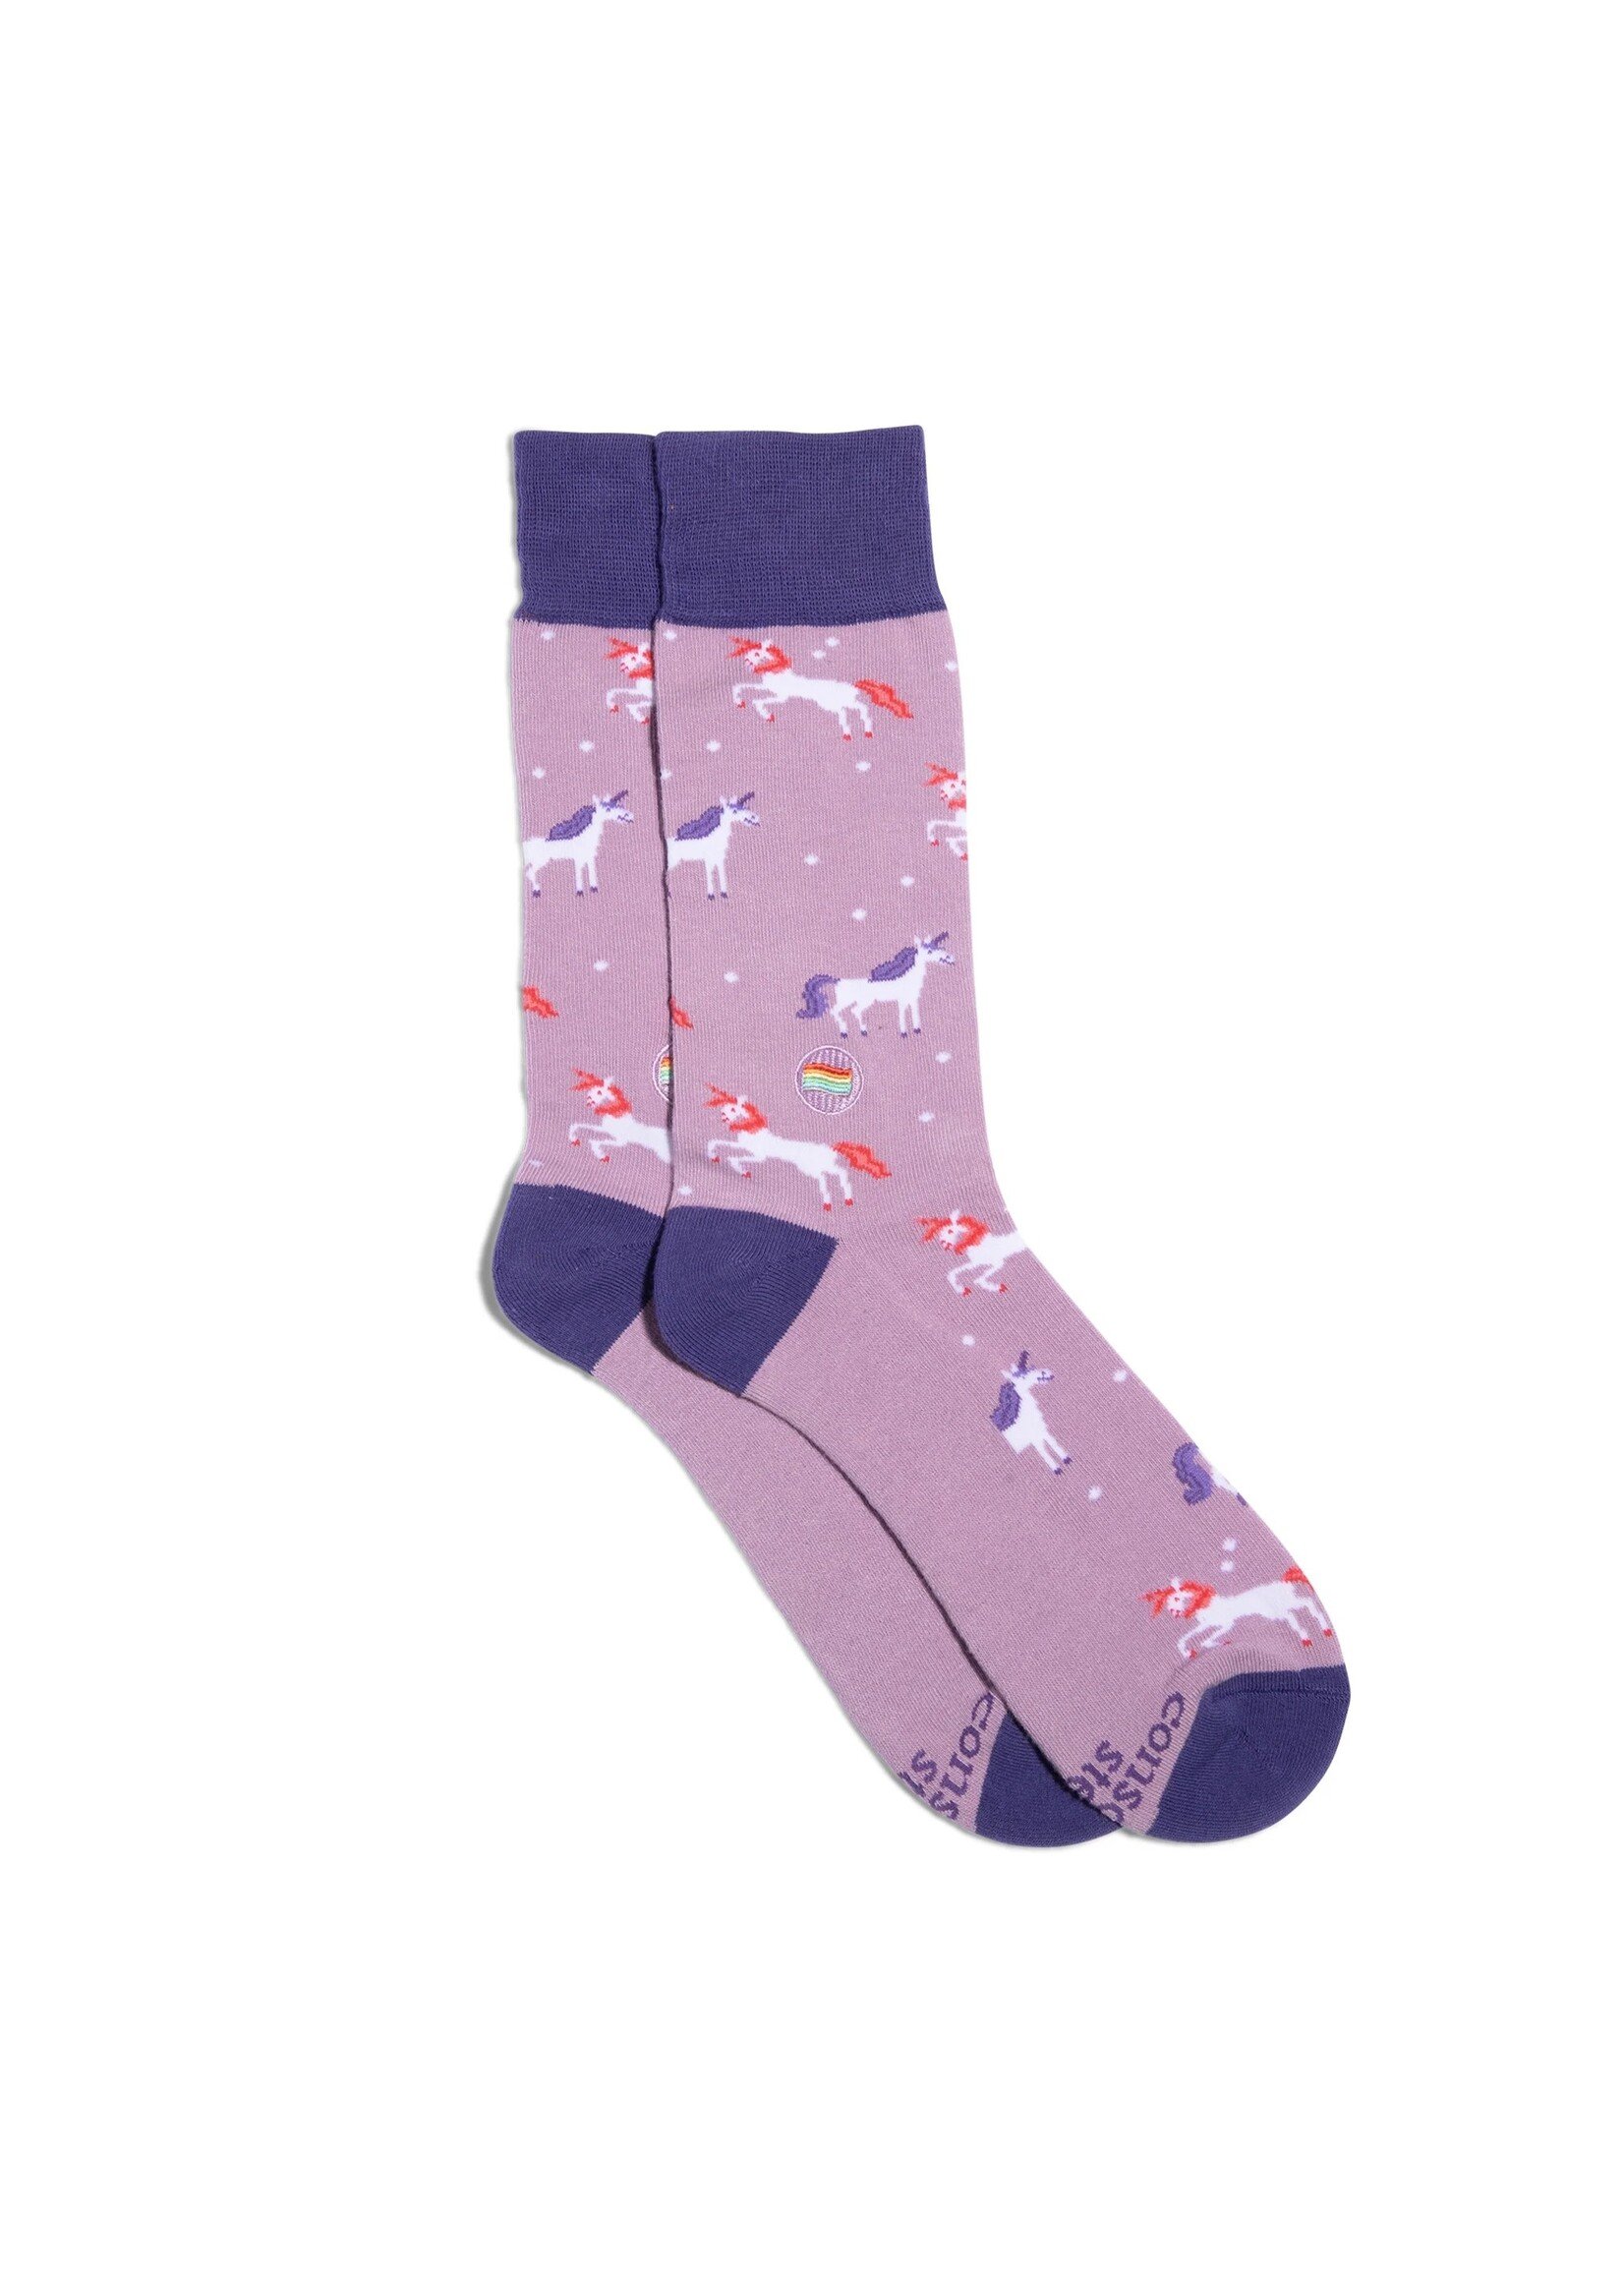 Socks - Save LGBTQ Lives Unicorns